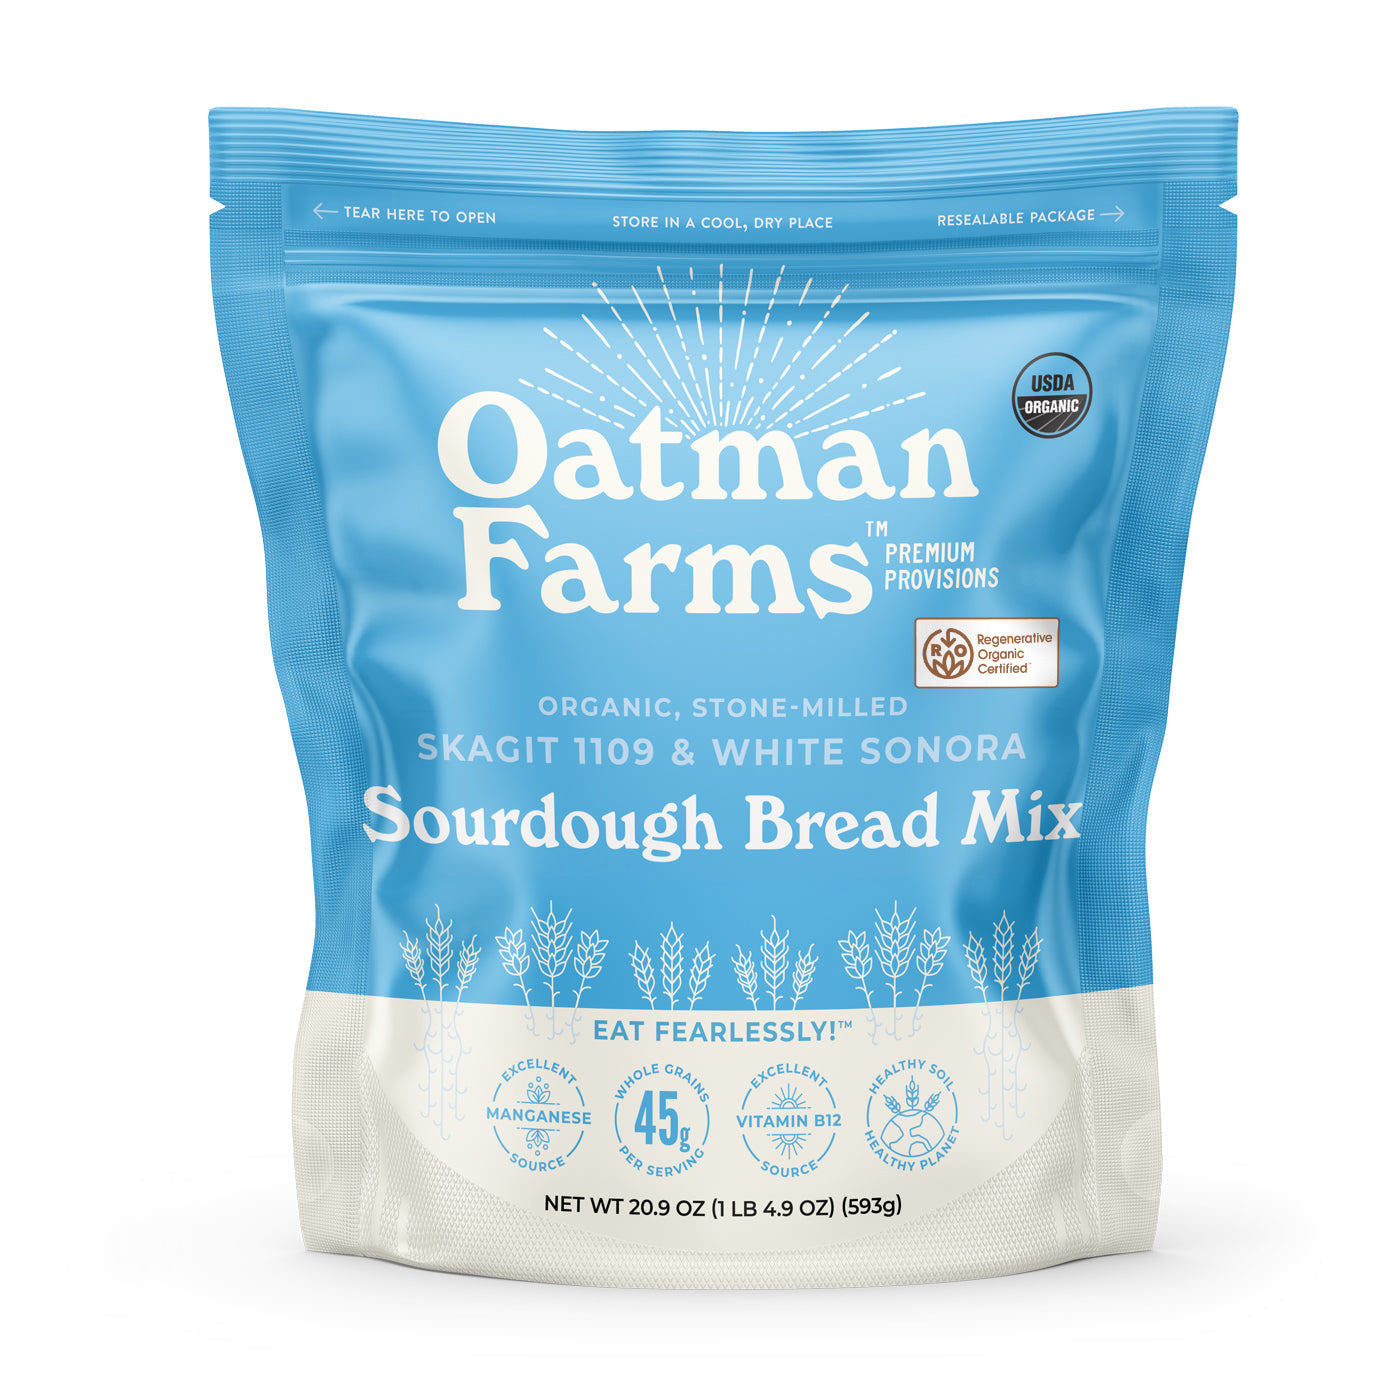 Oatman Farms Sourdough Bread Mix Skagit 1109 & White Sonora